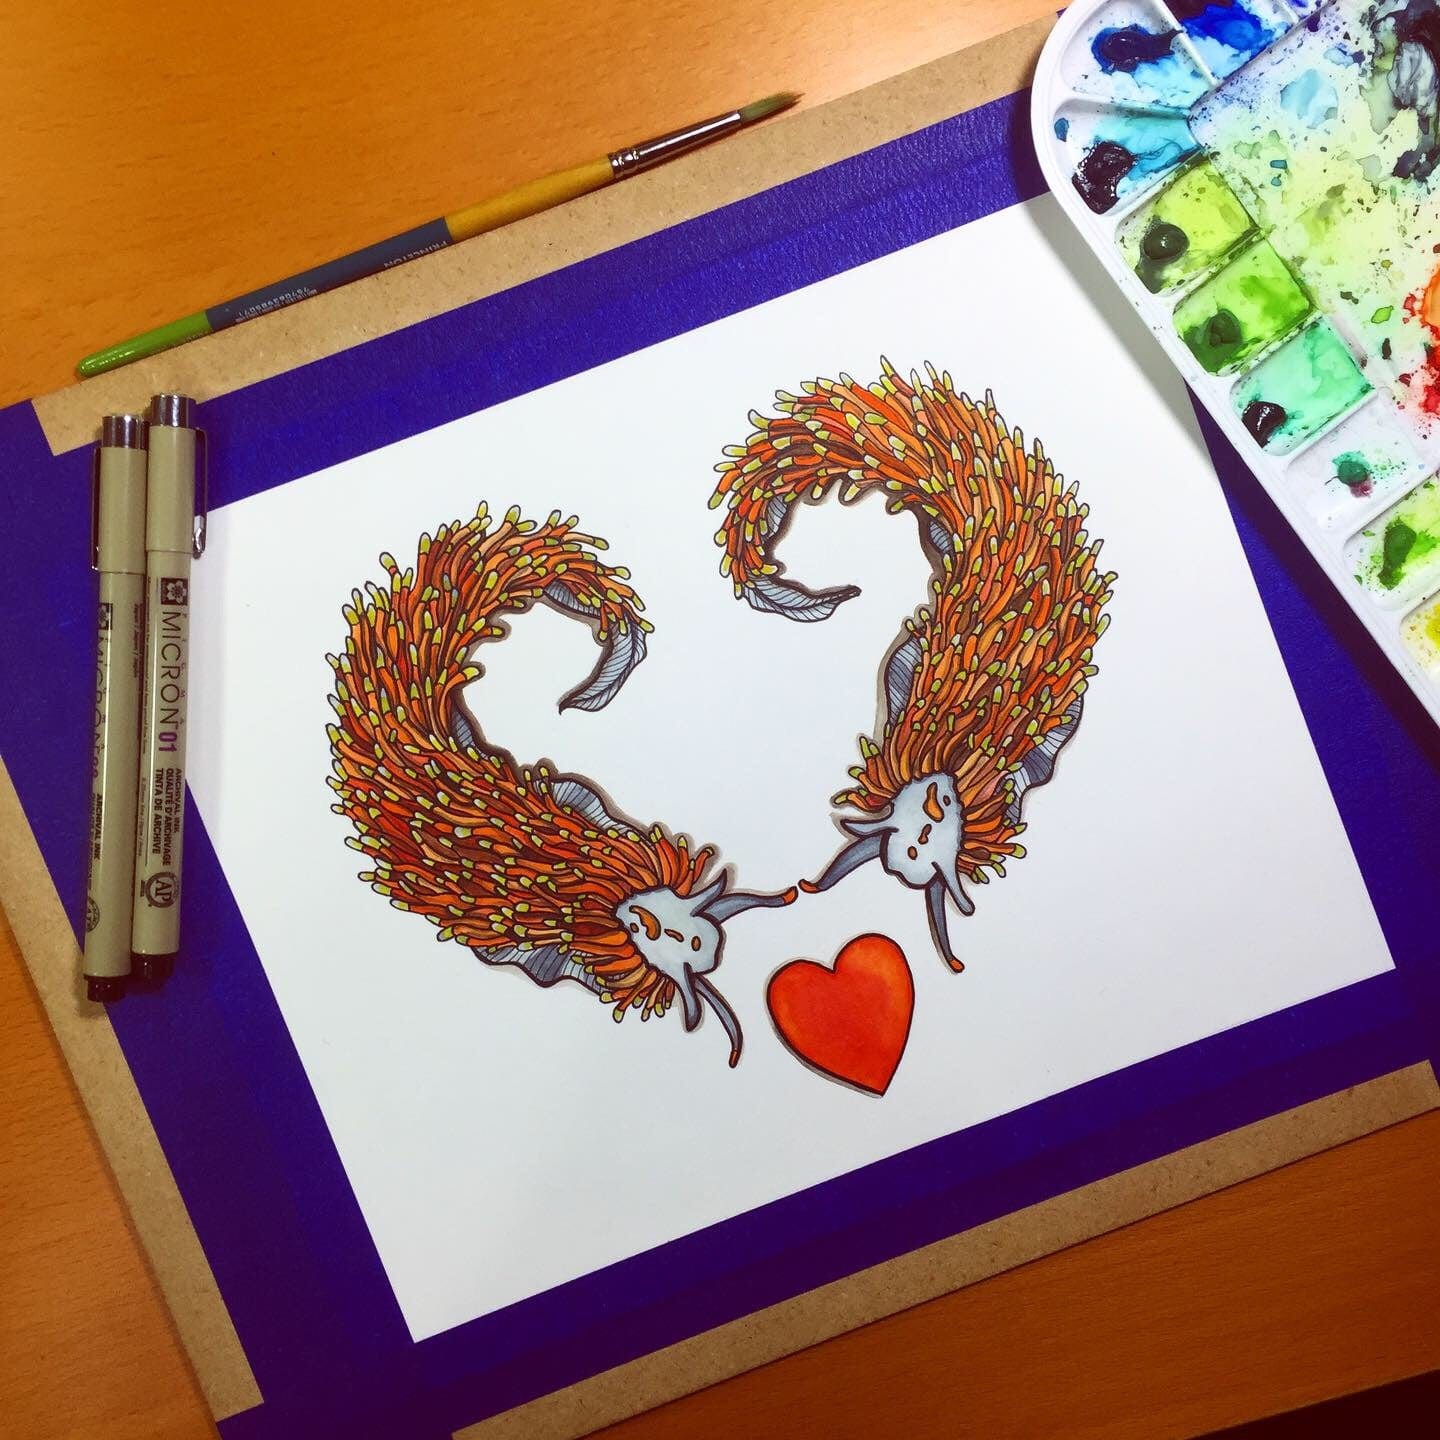 PinkPolish Design Original Art "Nudibranch Love" PNW Inspired Watercolor & Ink Illustration